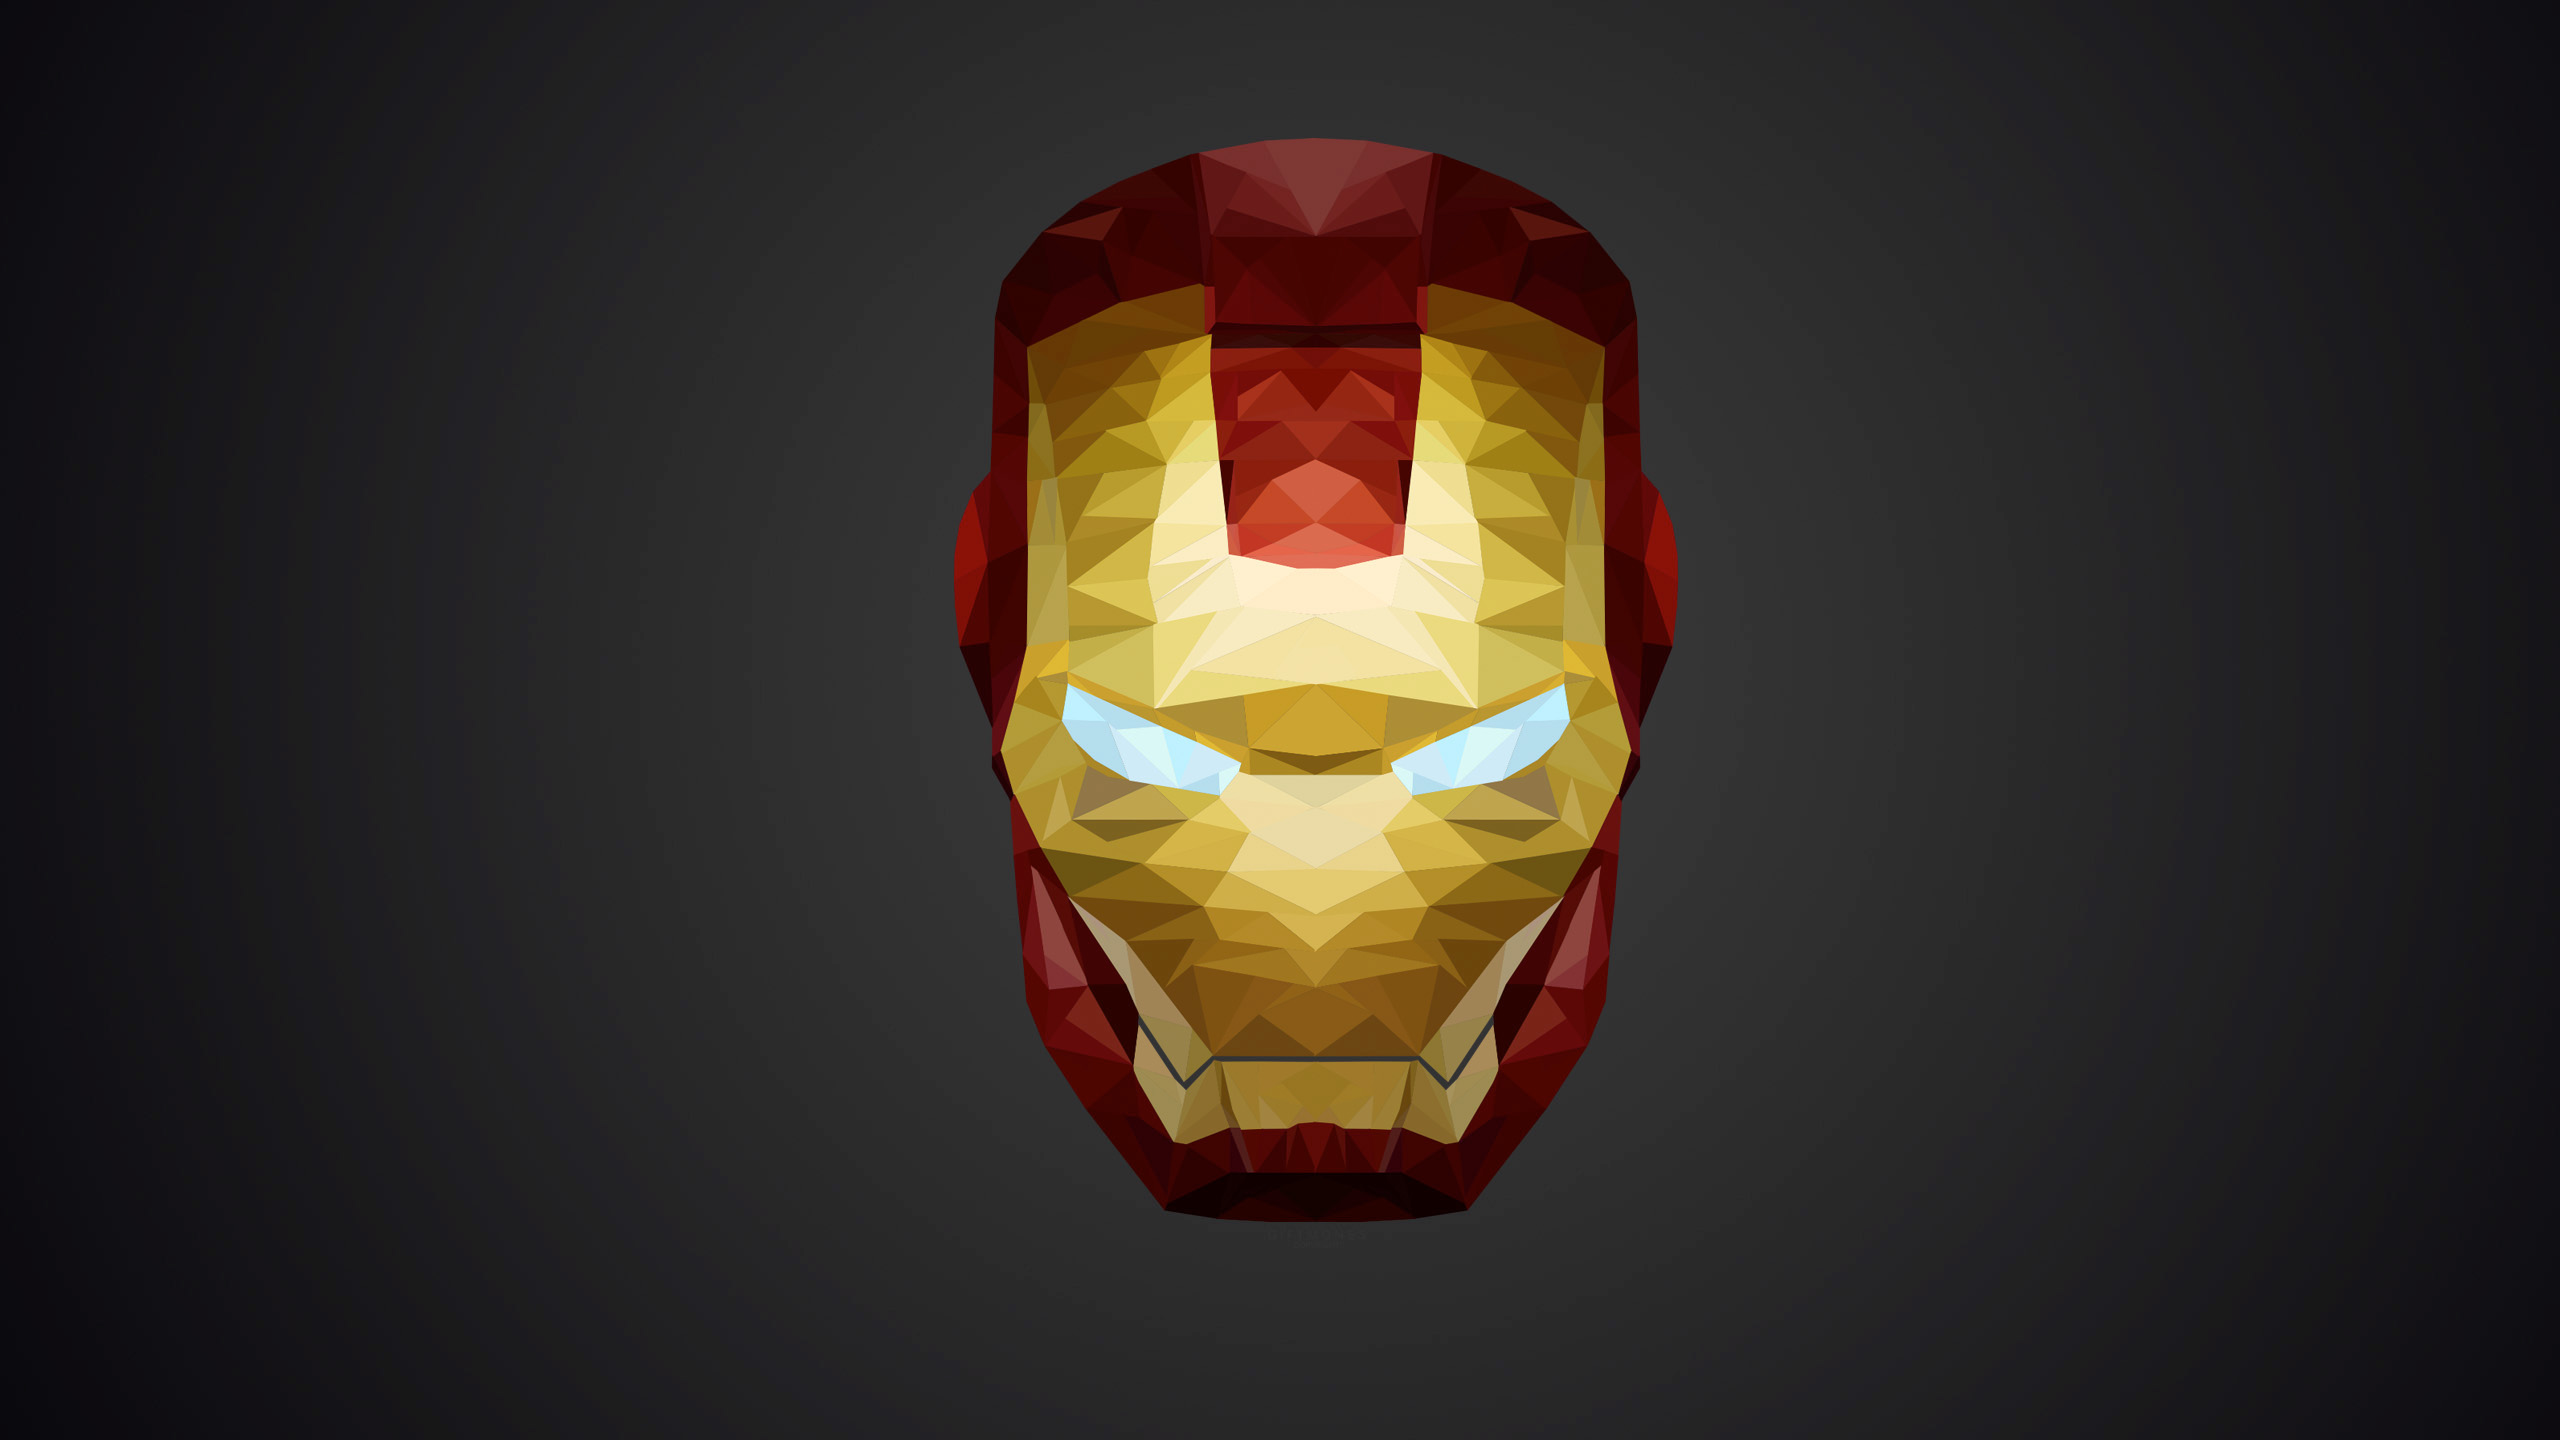 General 2560x1440 Iron Man artwork comics superhero simple background digital art minimalism